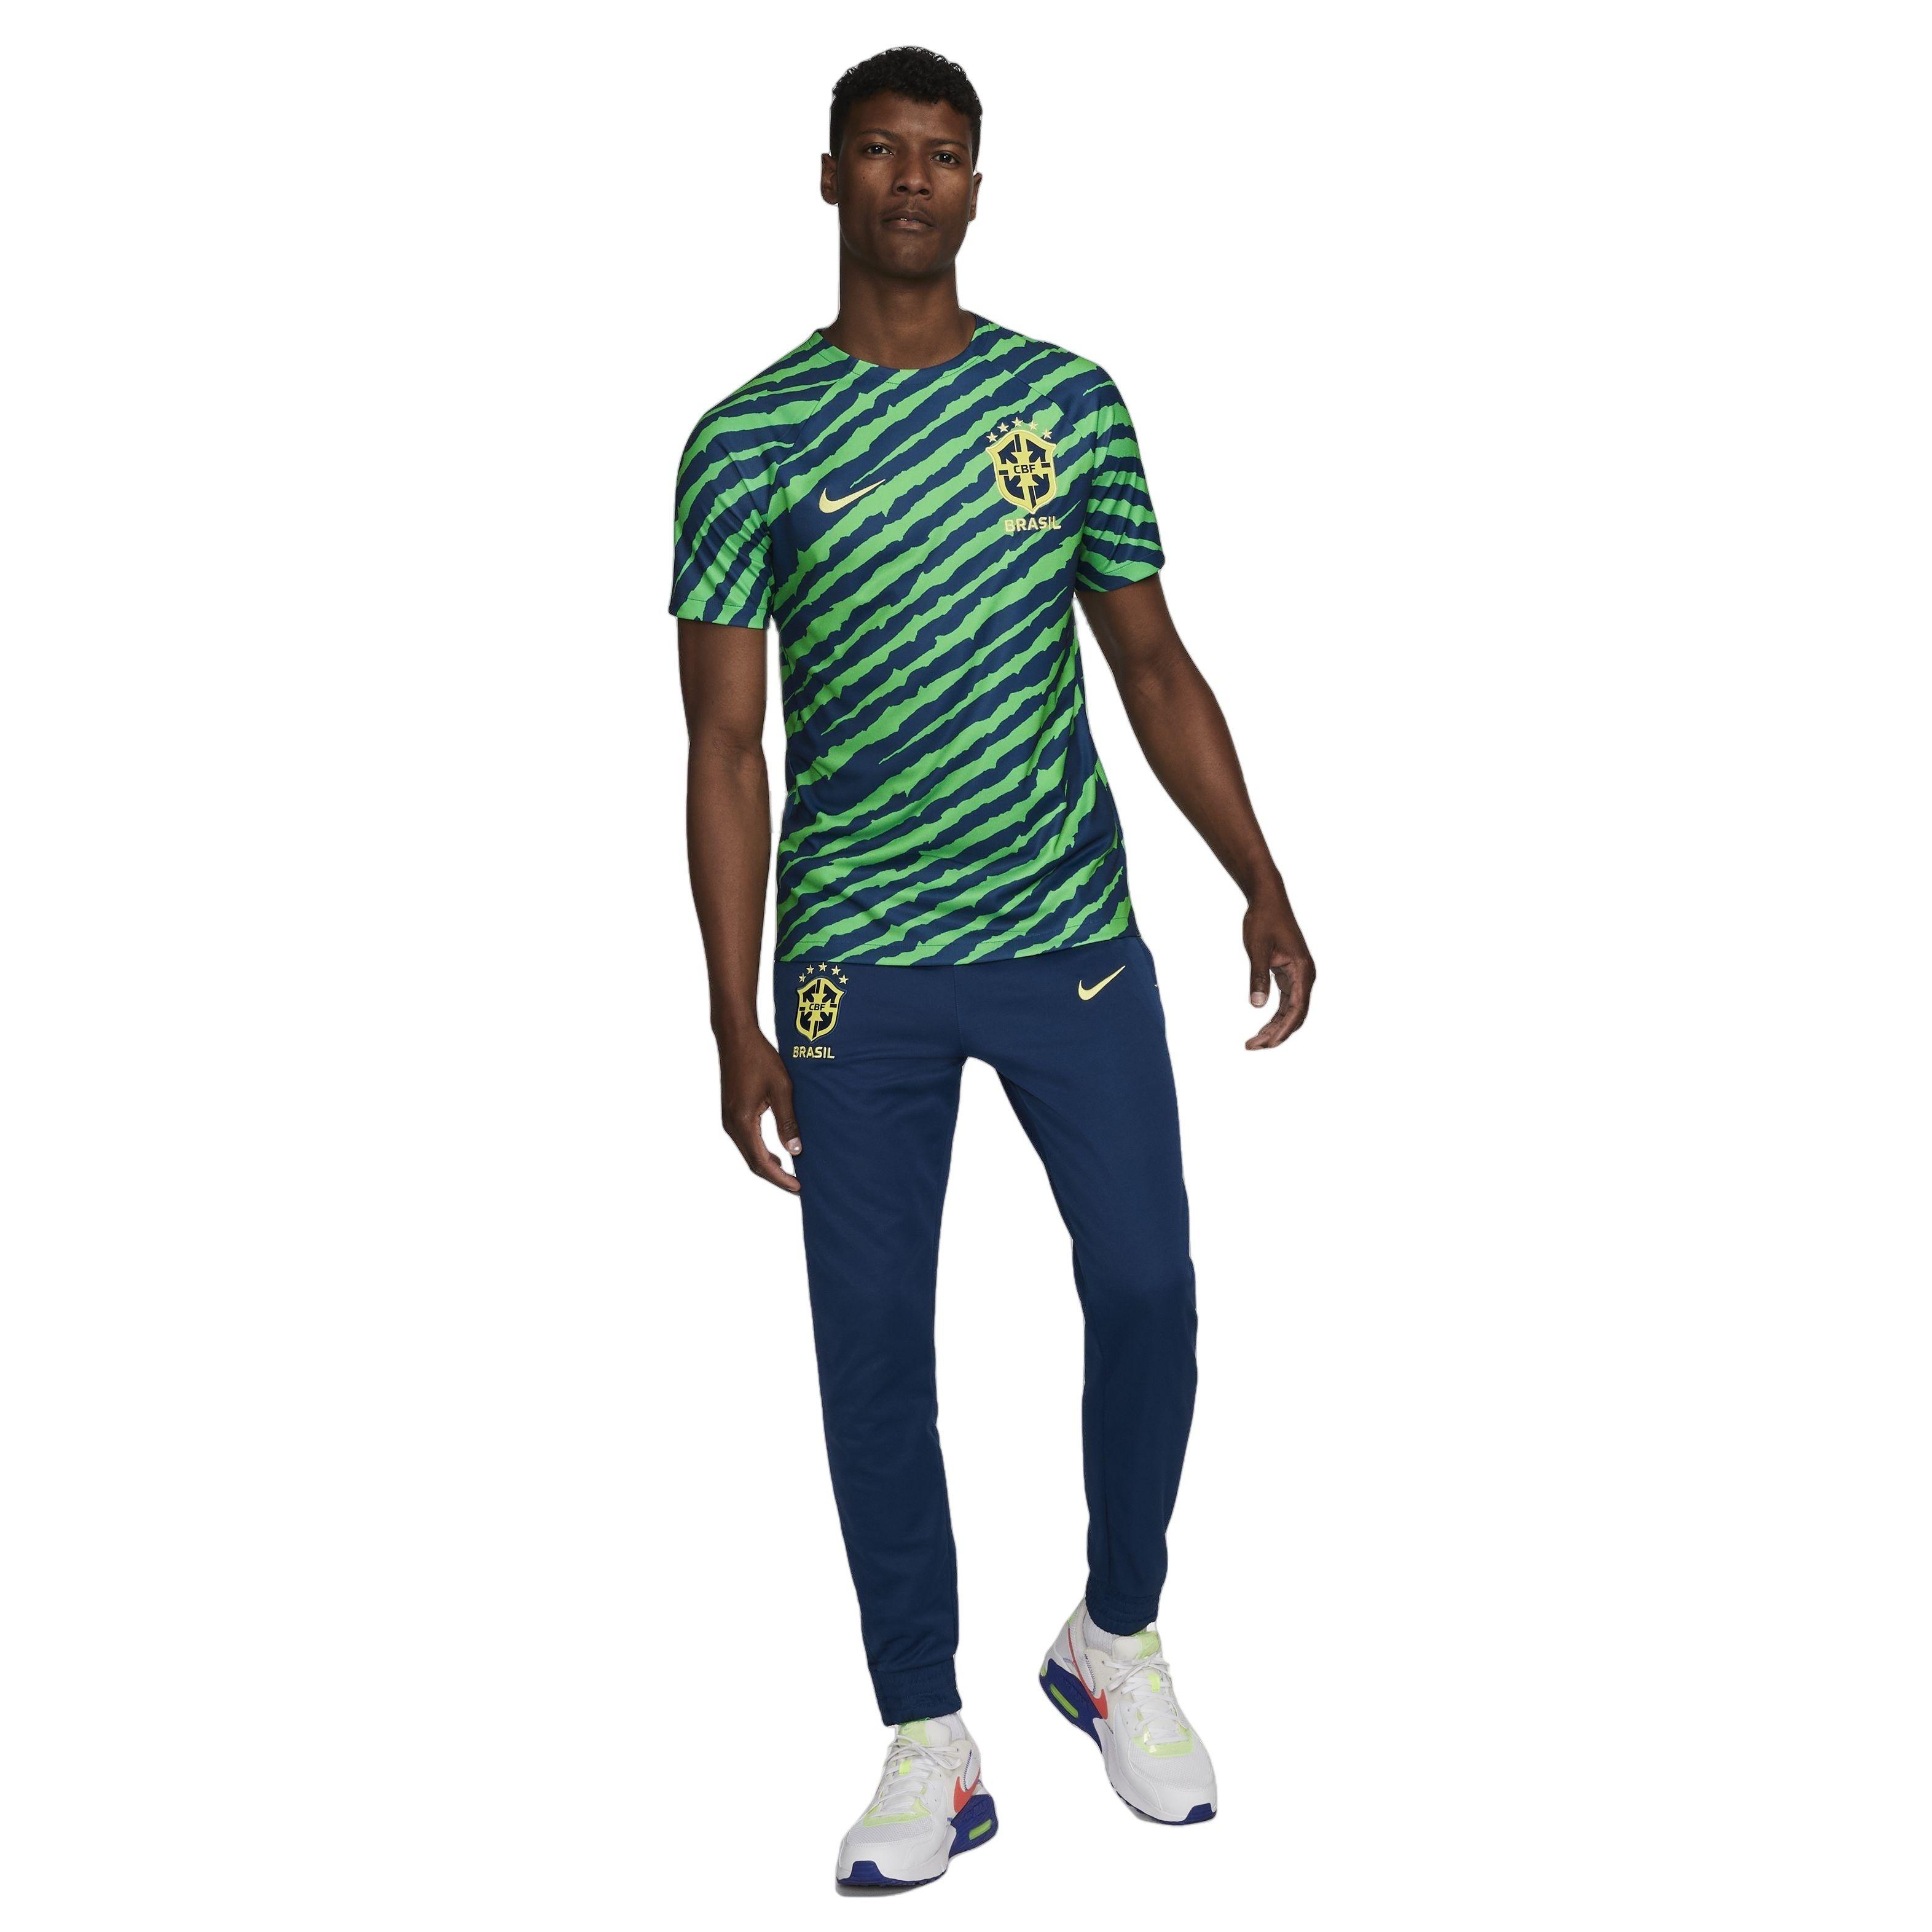 Nike Performance BRASIL CBF PREMATCH UNISEX - Football shirt